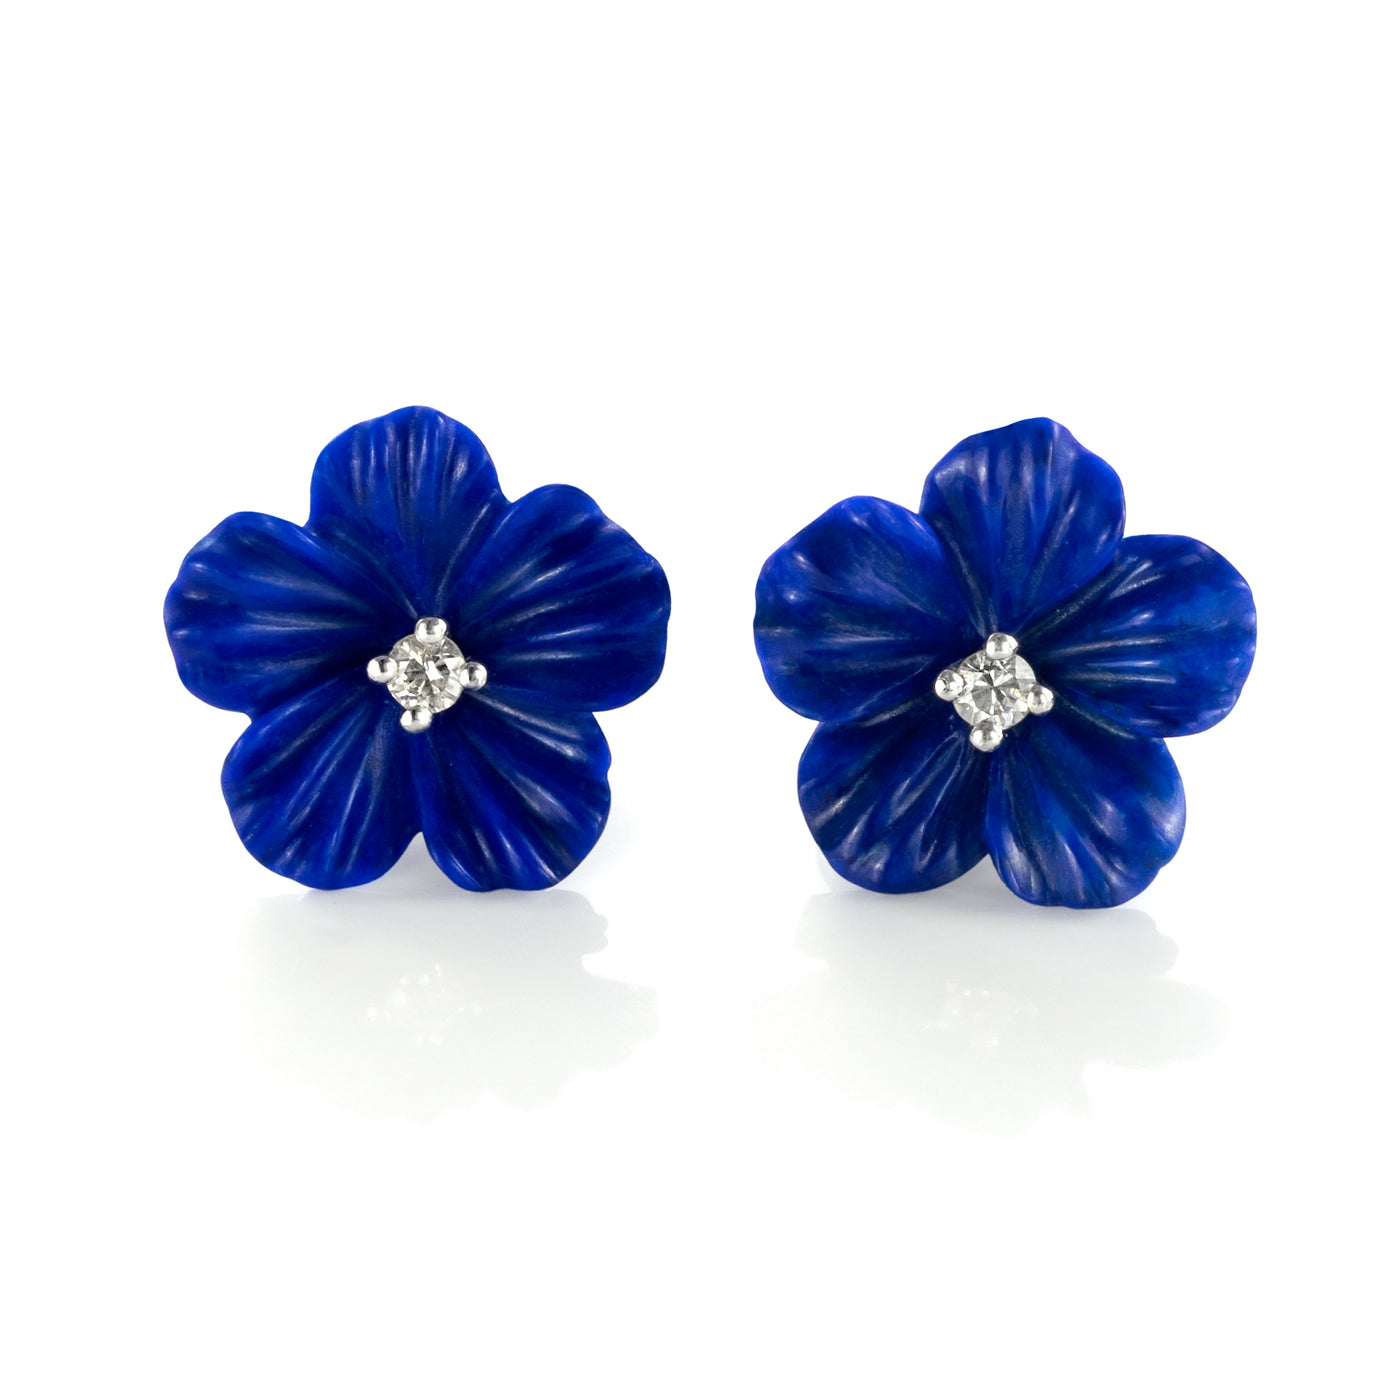 Precious flowers * Lapis Lazuli 12 mm